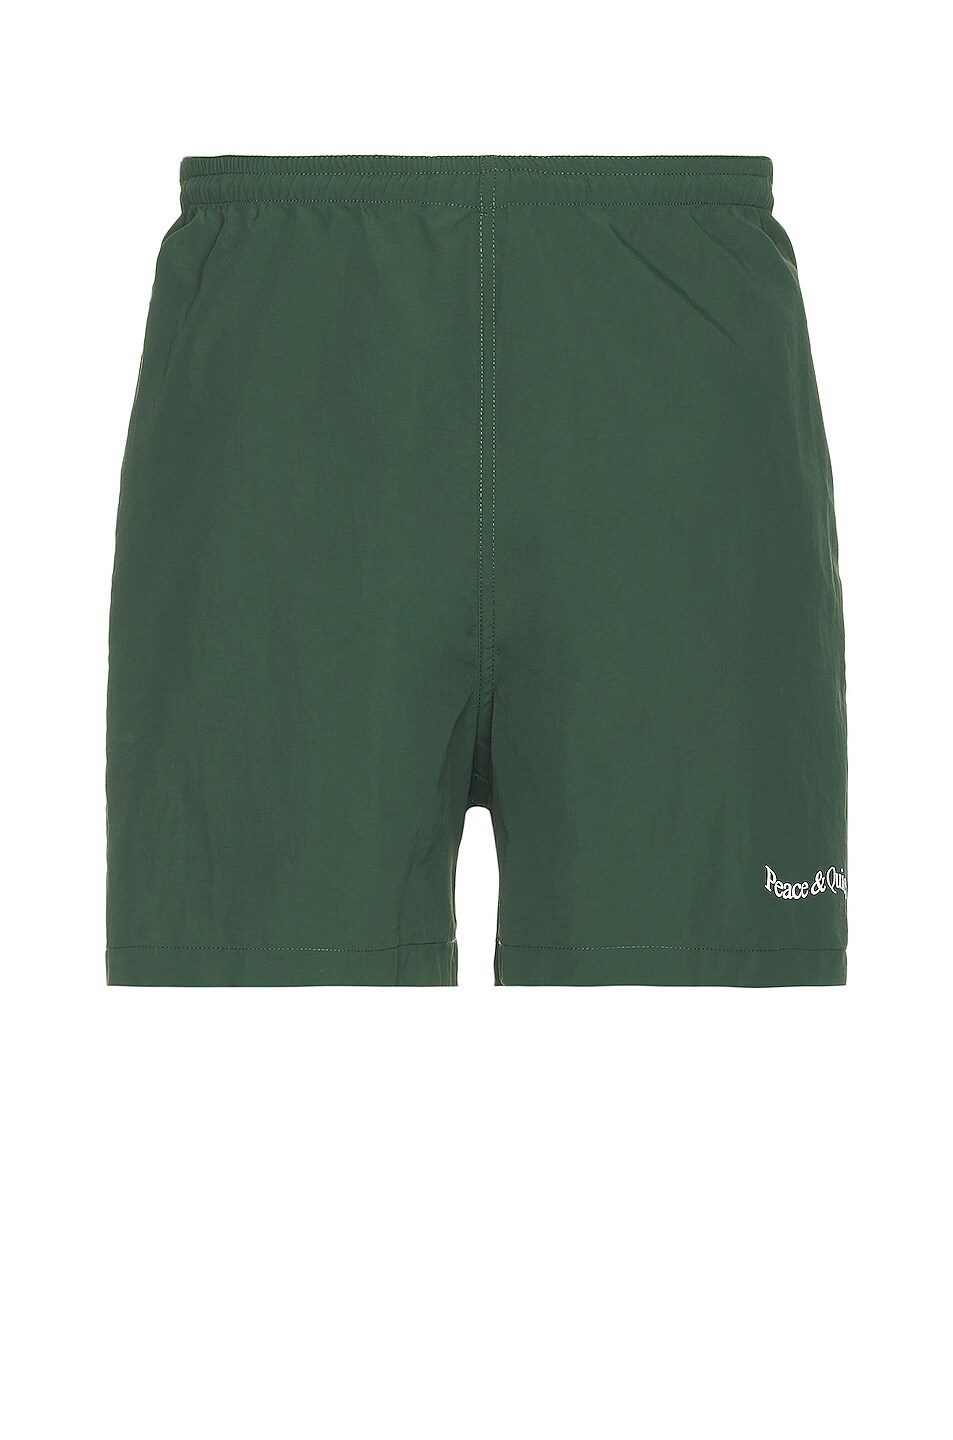 Workmark 5 Shorts in Green